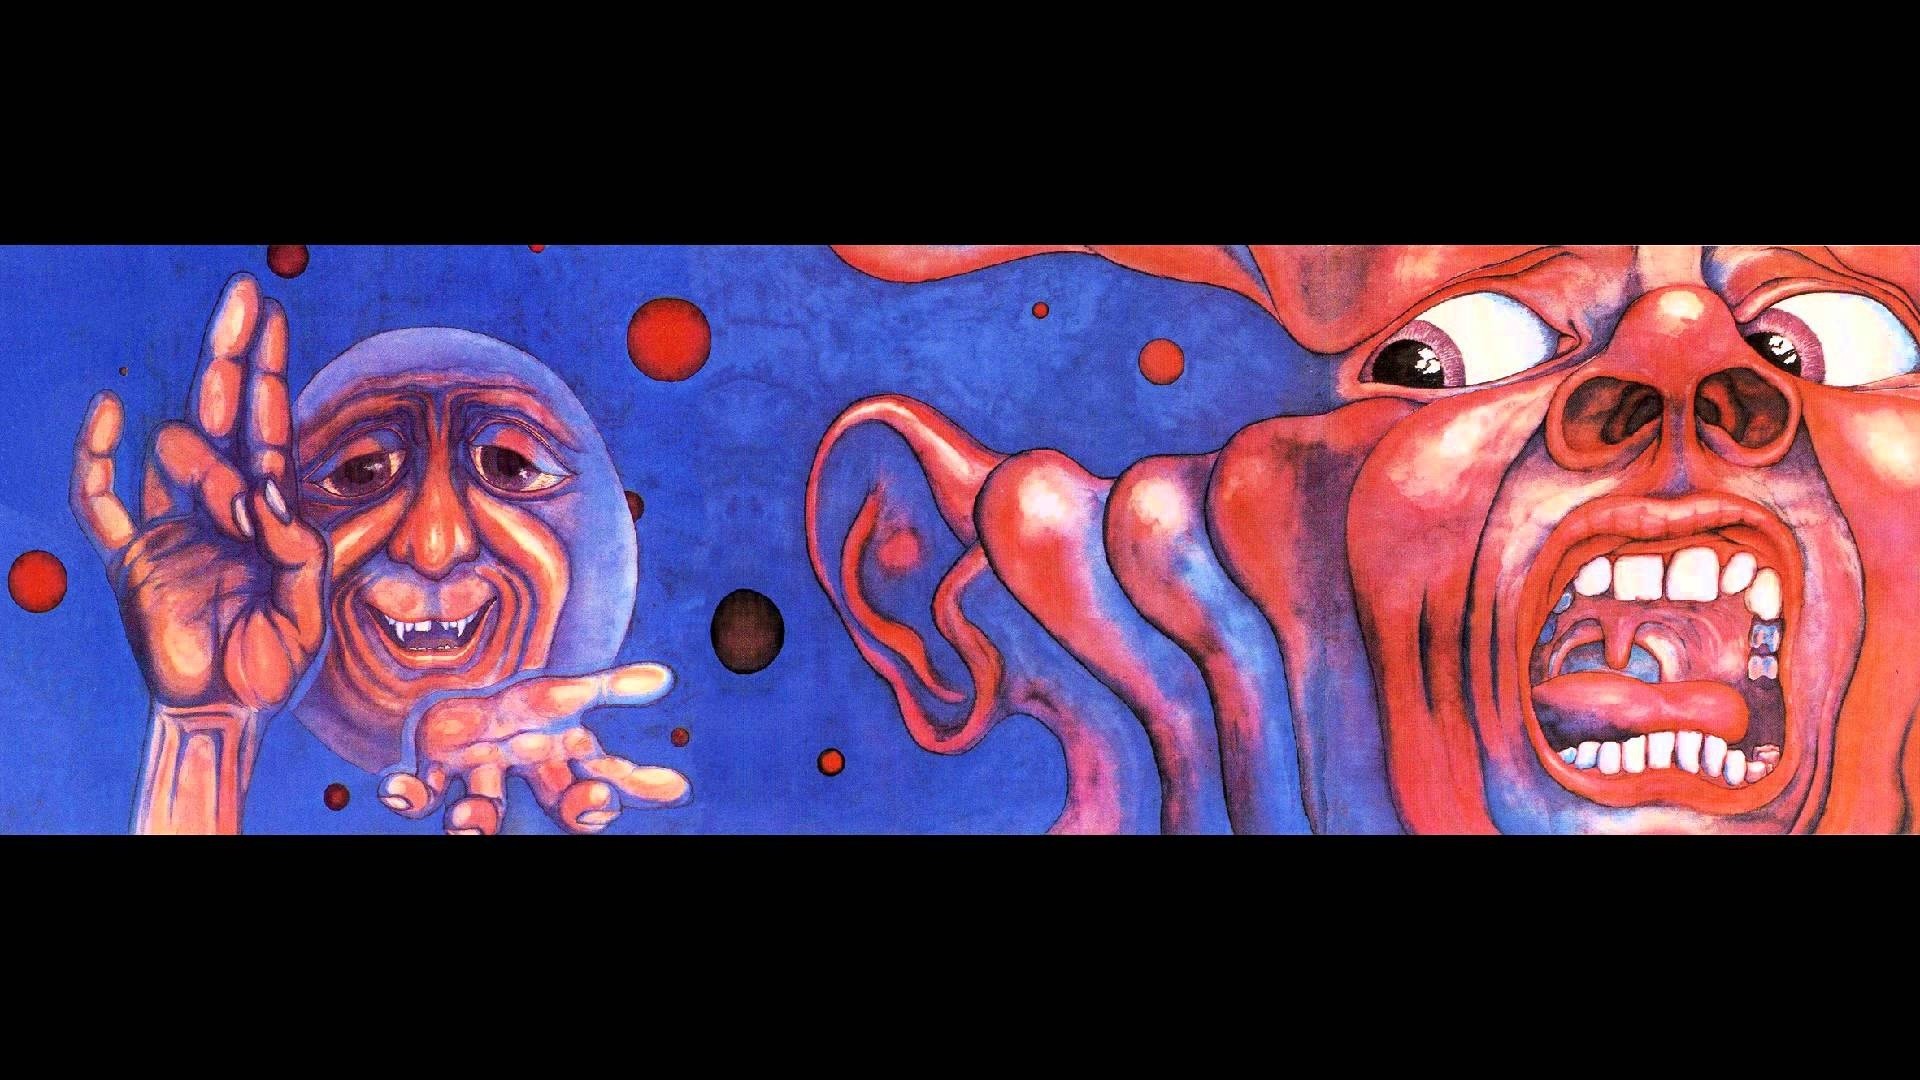 1920x1080 The Tangent - 21st Century Schizoid Man (King Crimson Cover) - YouTube